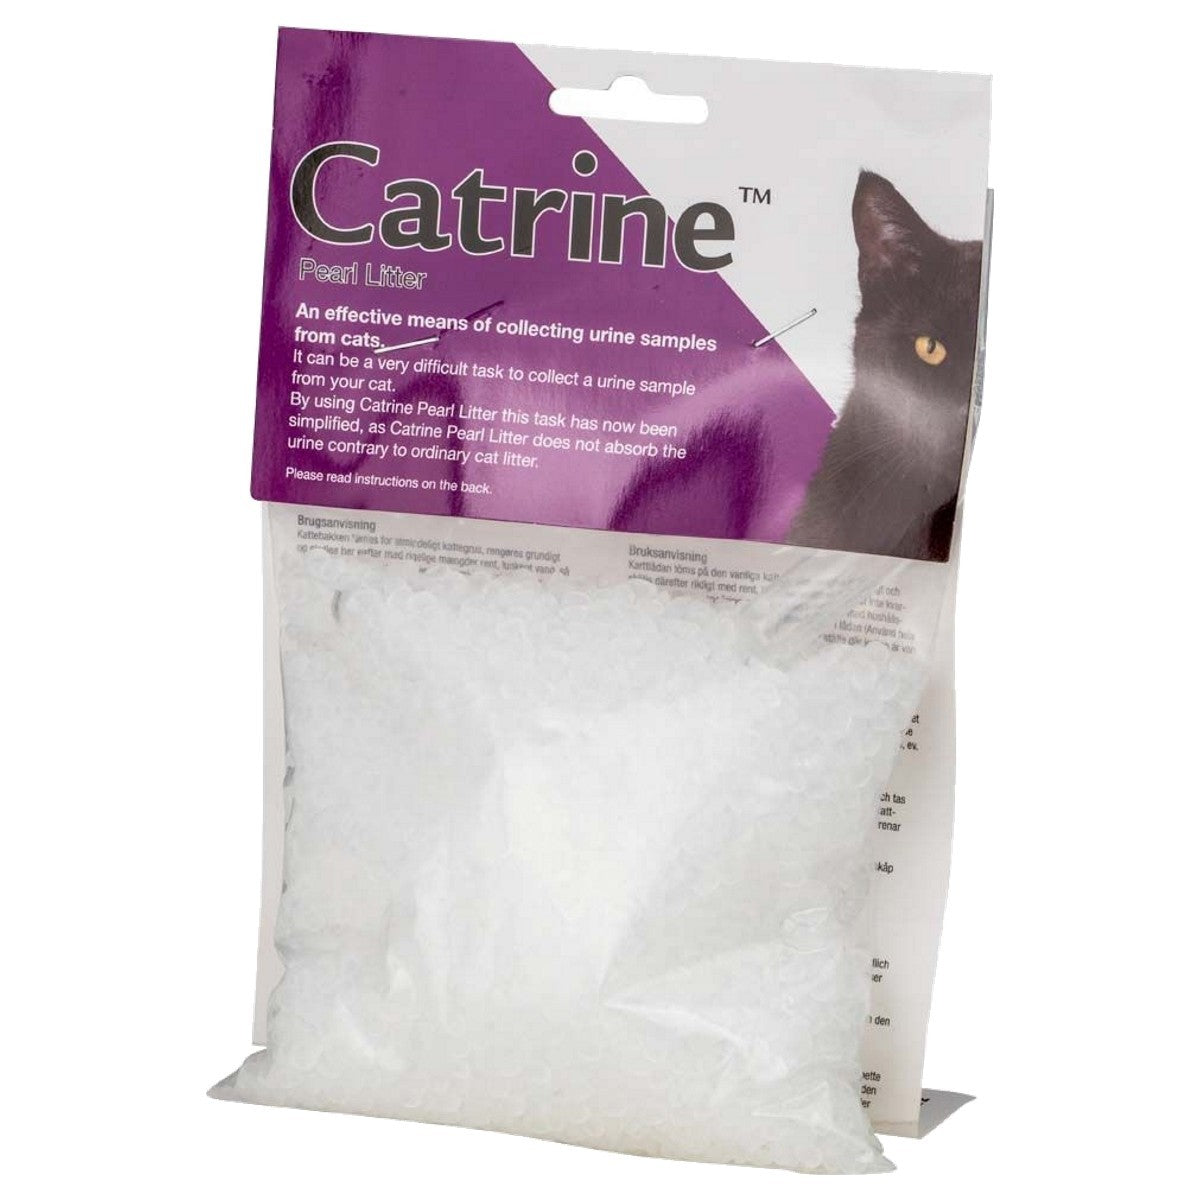 Catrine Urine Collection Kit